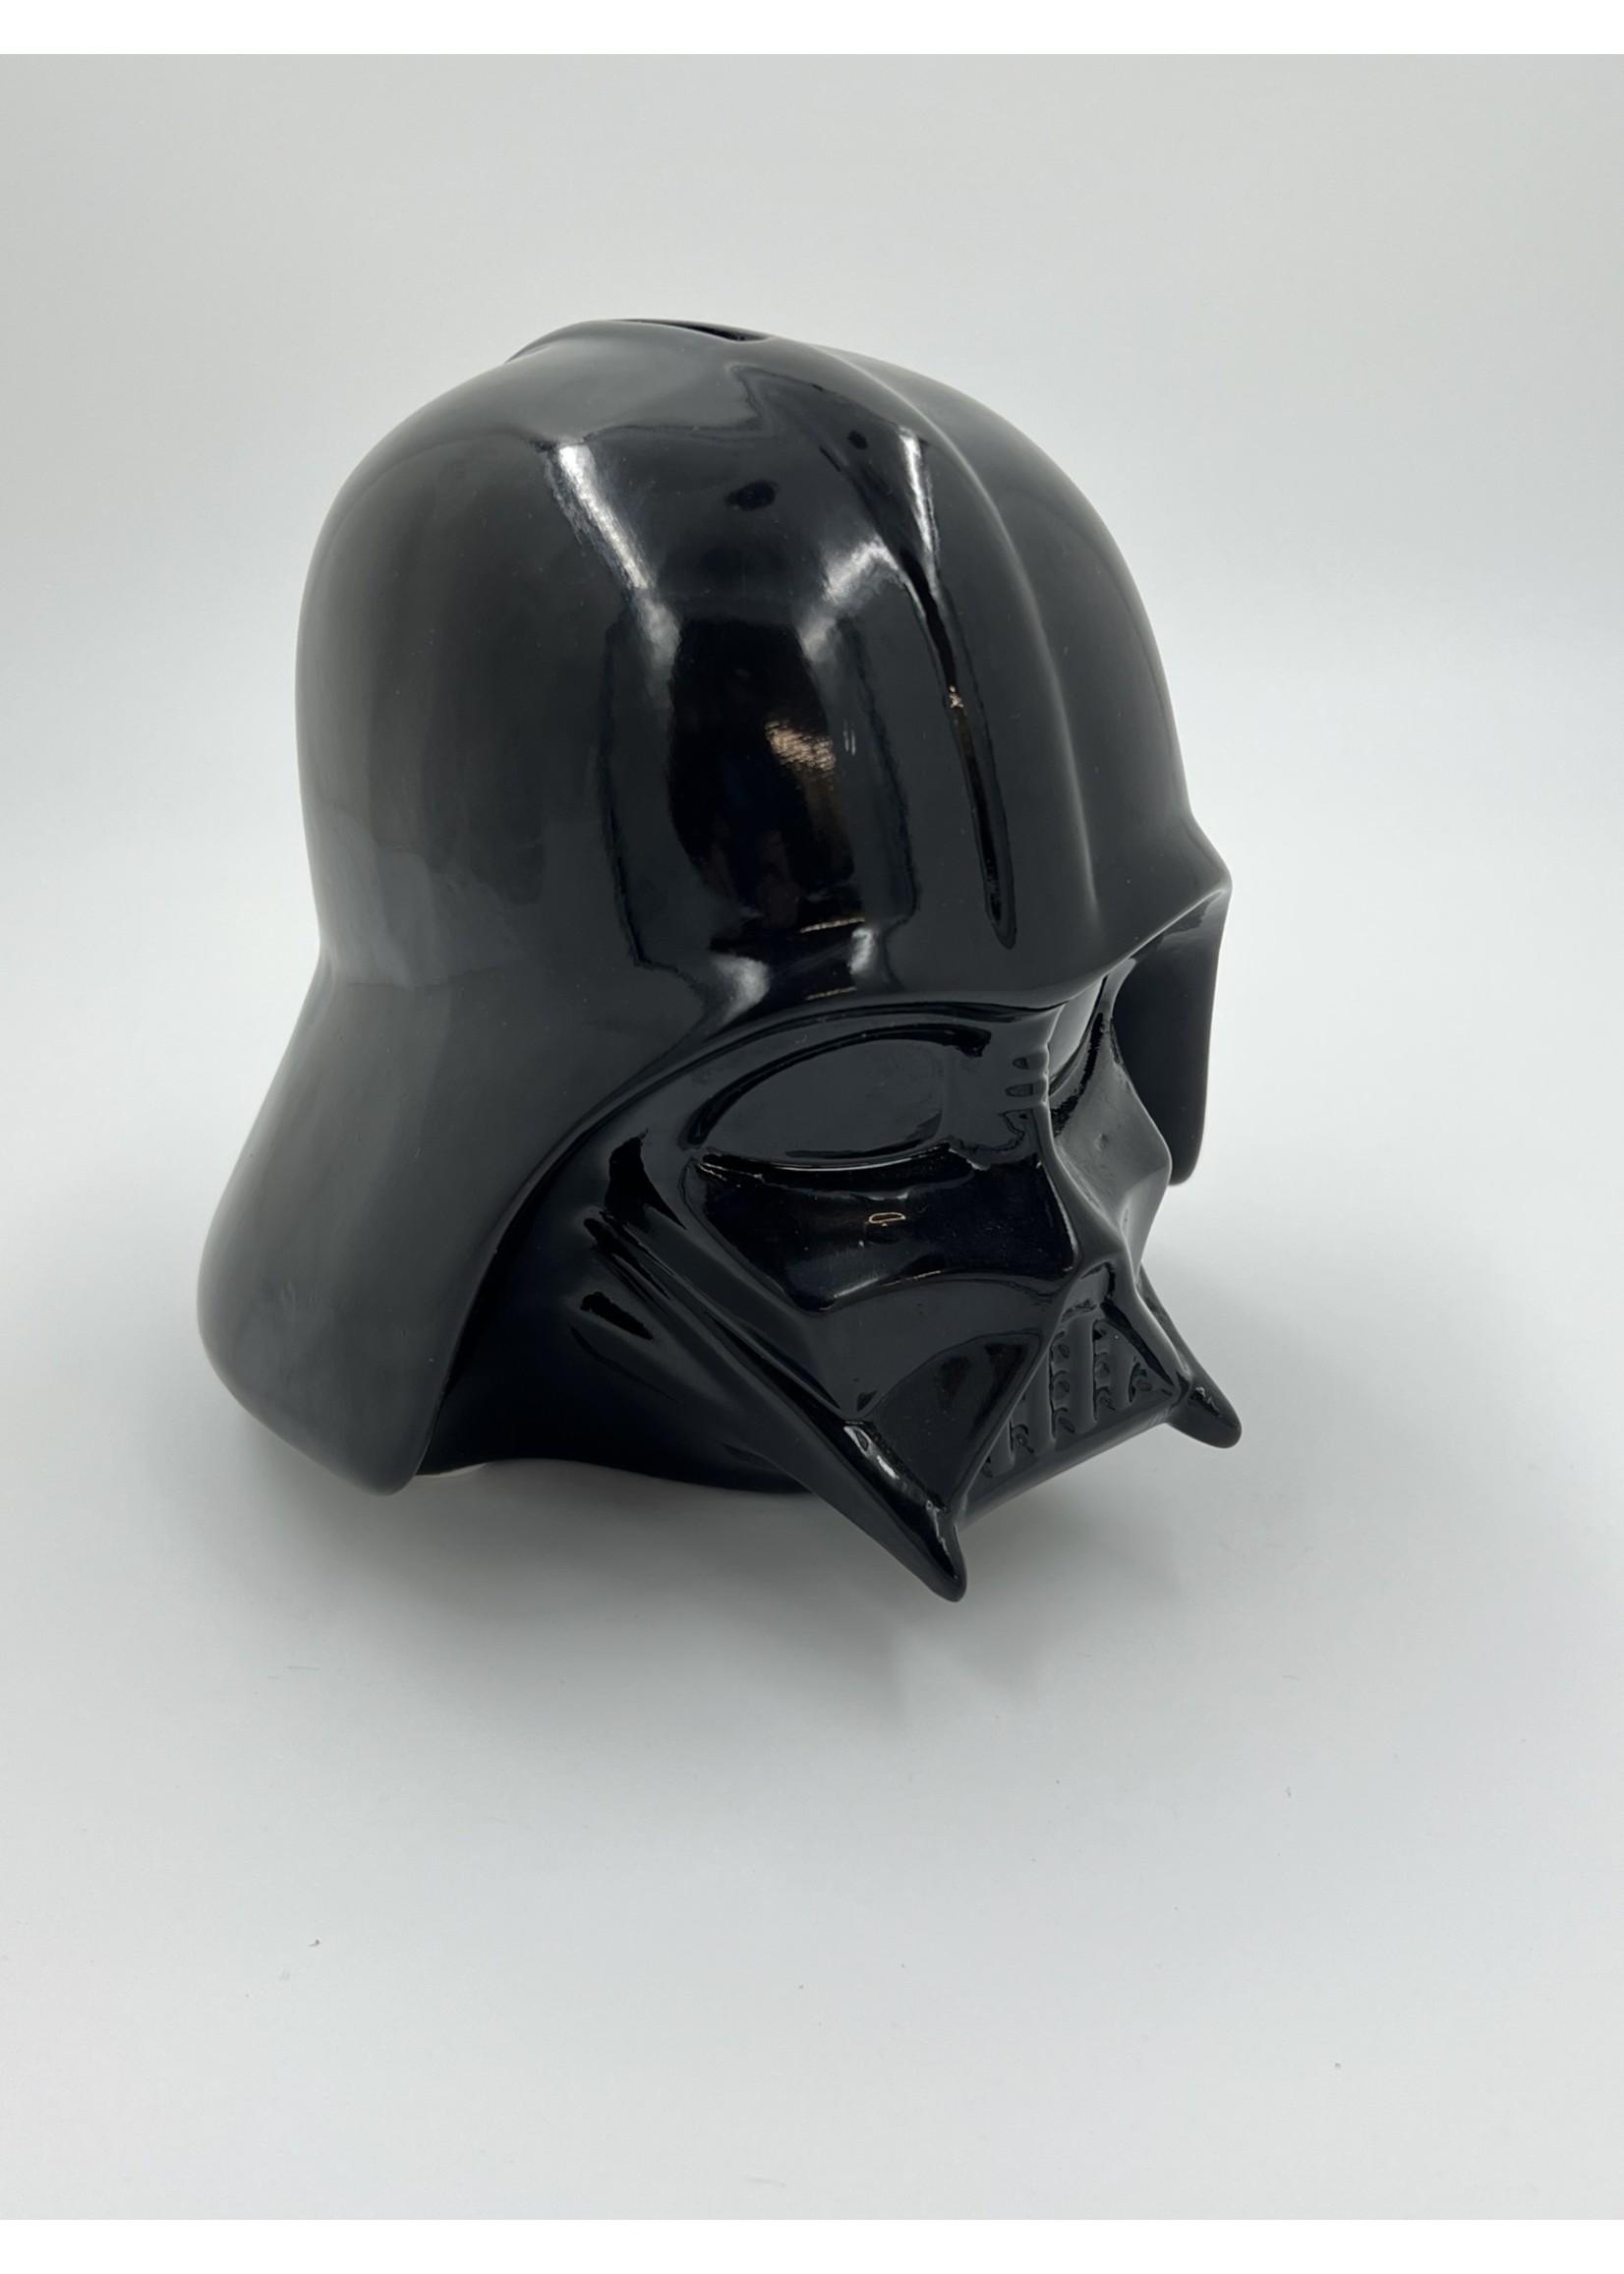 Other Things Darth Vader Ceramic Bank